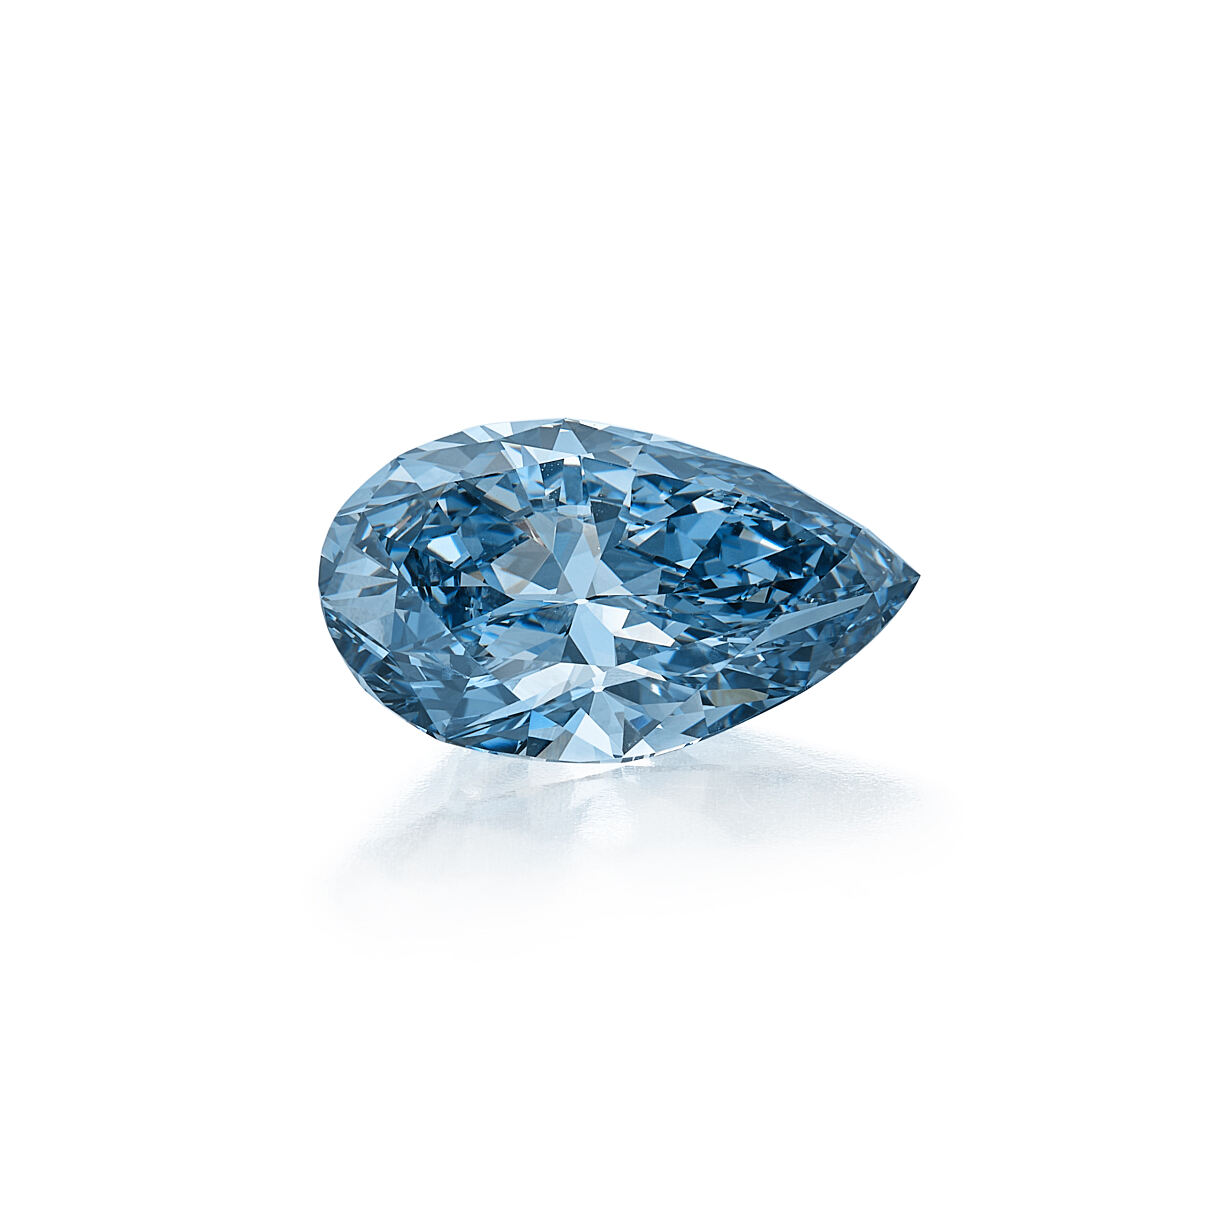 Bulgari Laguna Blu, 11.16 carats, To be sold at Sothebys Geneva Luxury Week (2)